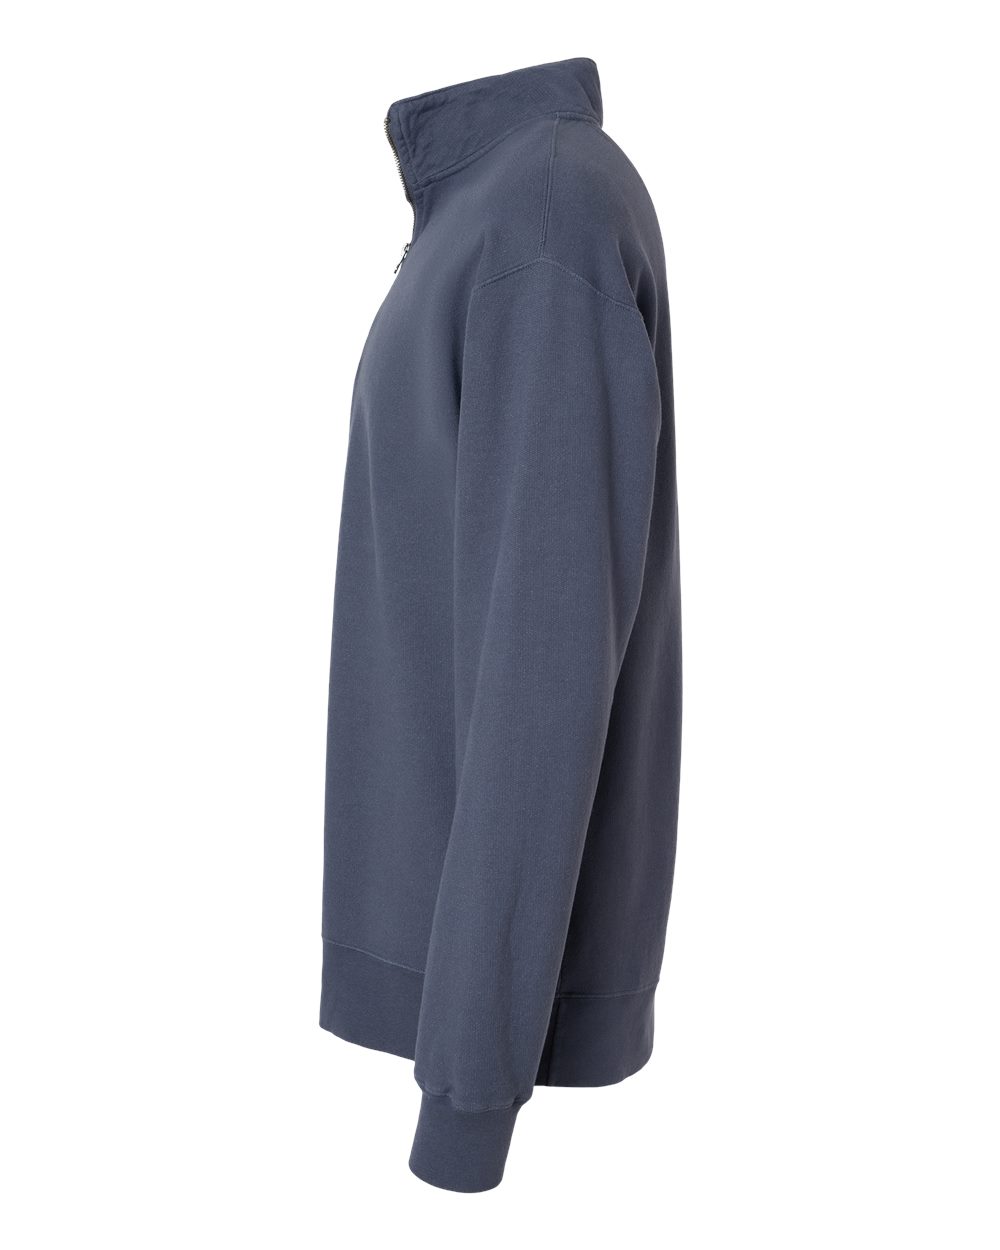 ComfortWash by Hanes - Garment-Dyed Quarter-Zip Sweatshirt - GDH425 -  Cayenne 